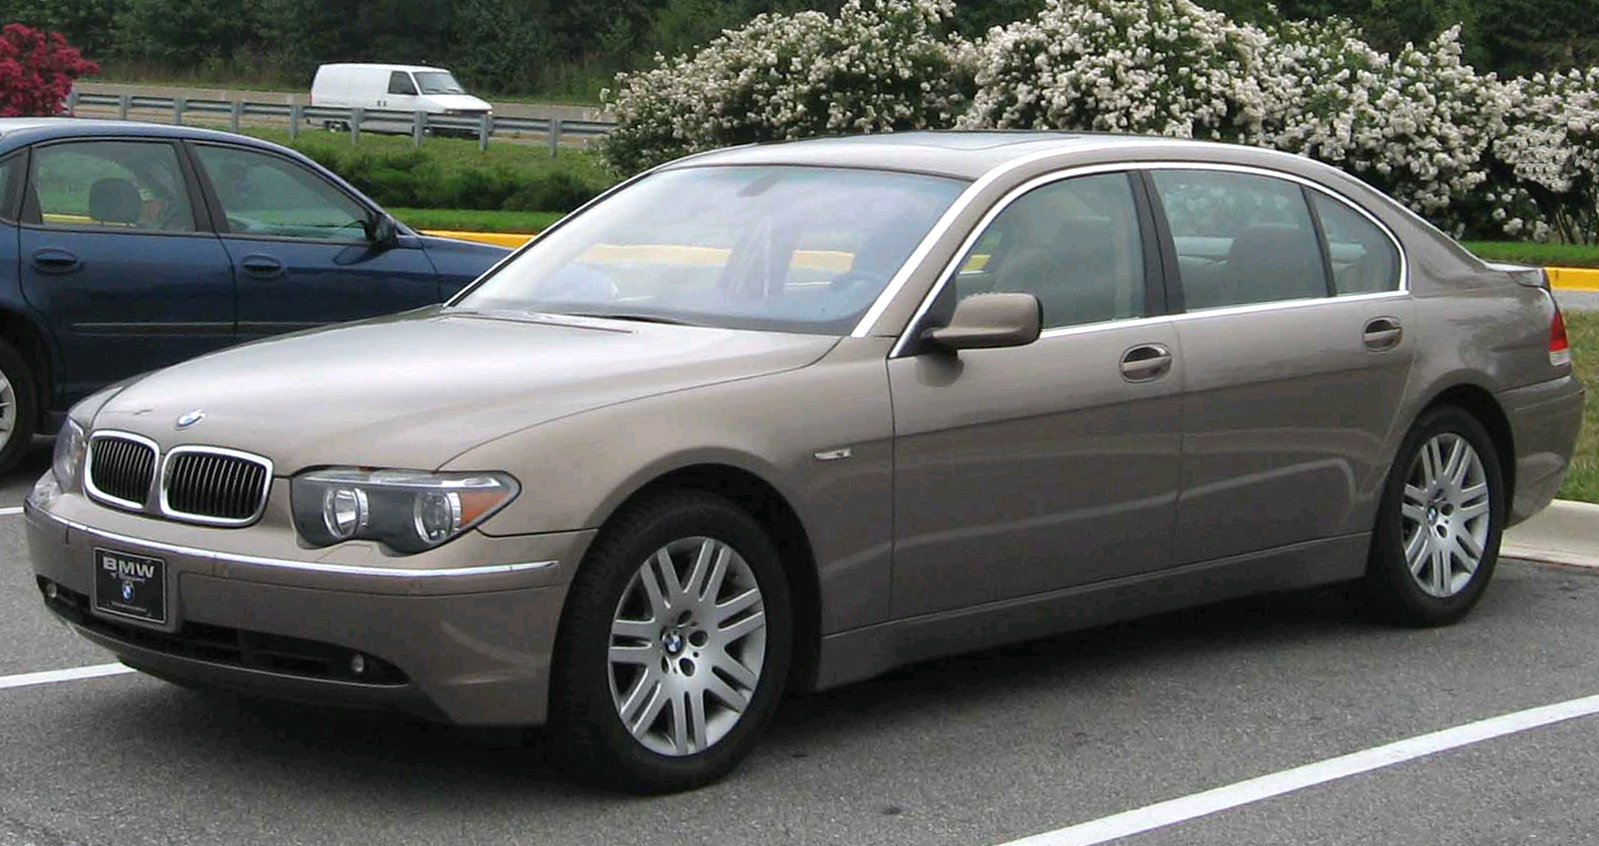 File:03-05 BMW 745Li.jpg - Wikimedia Commons